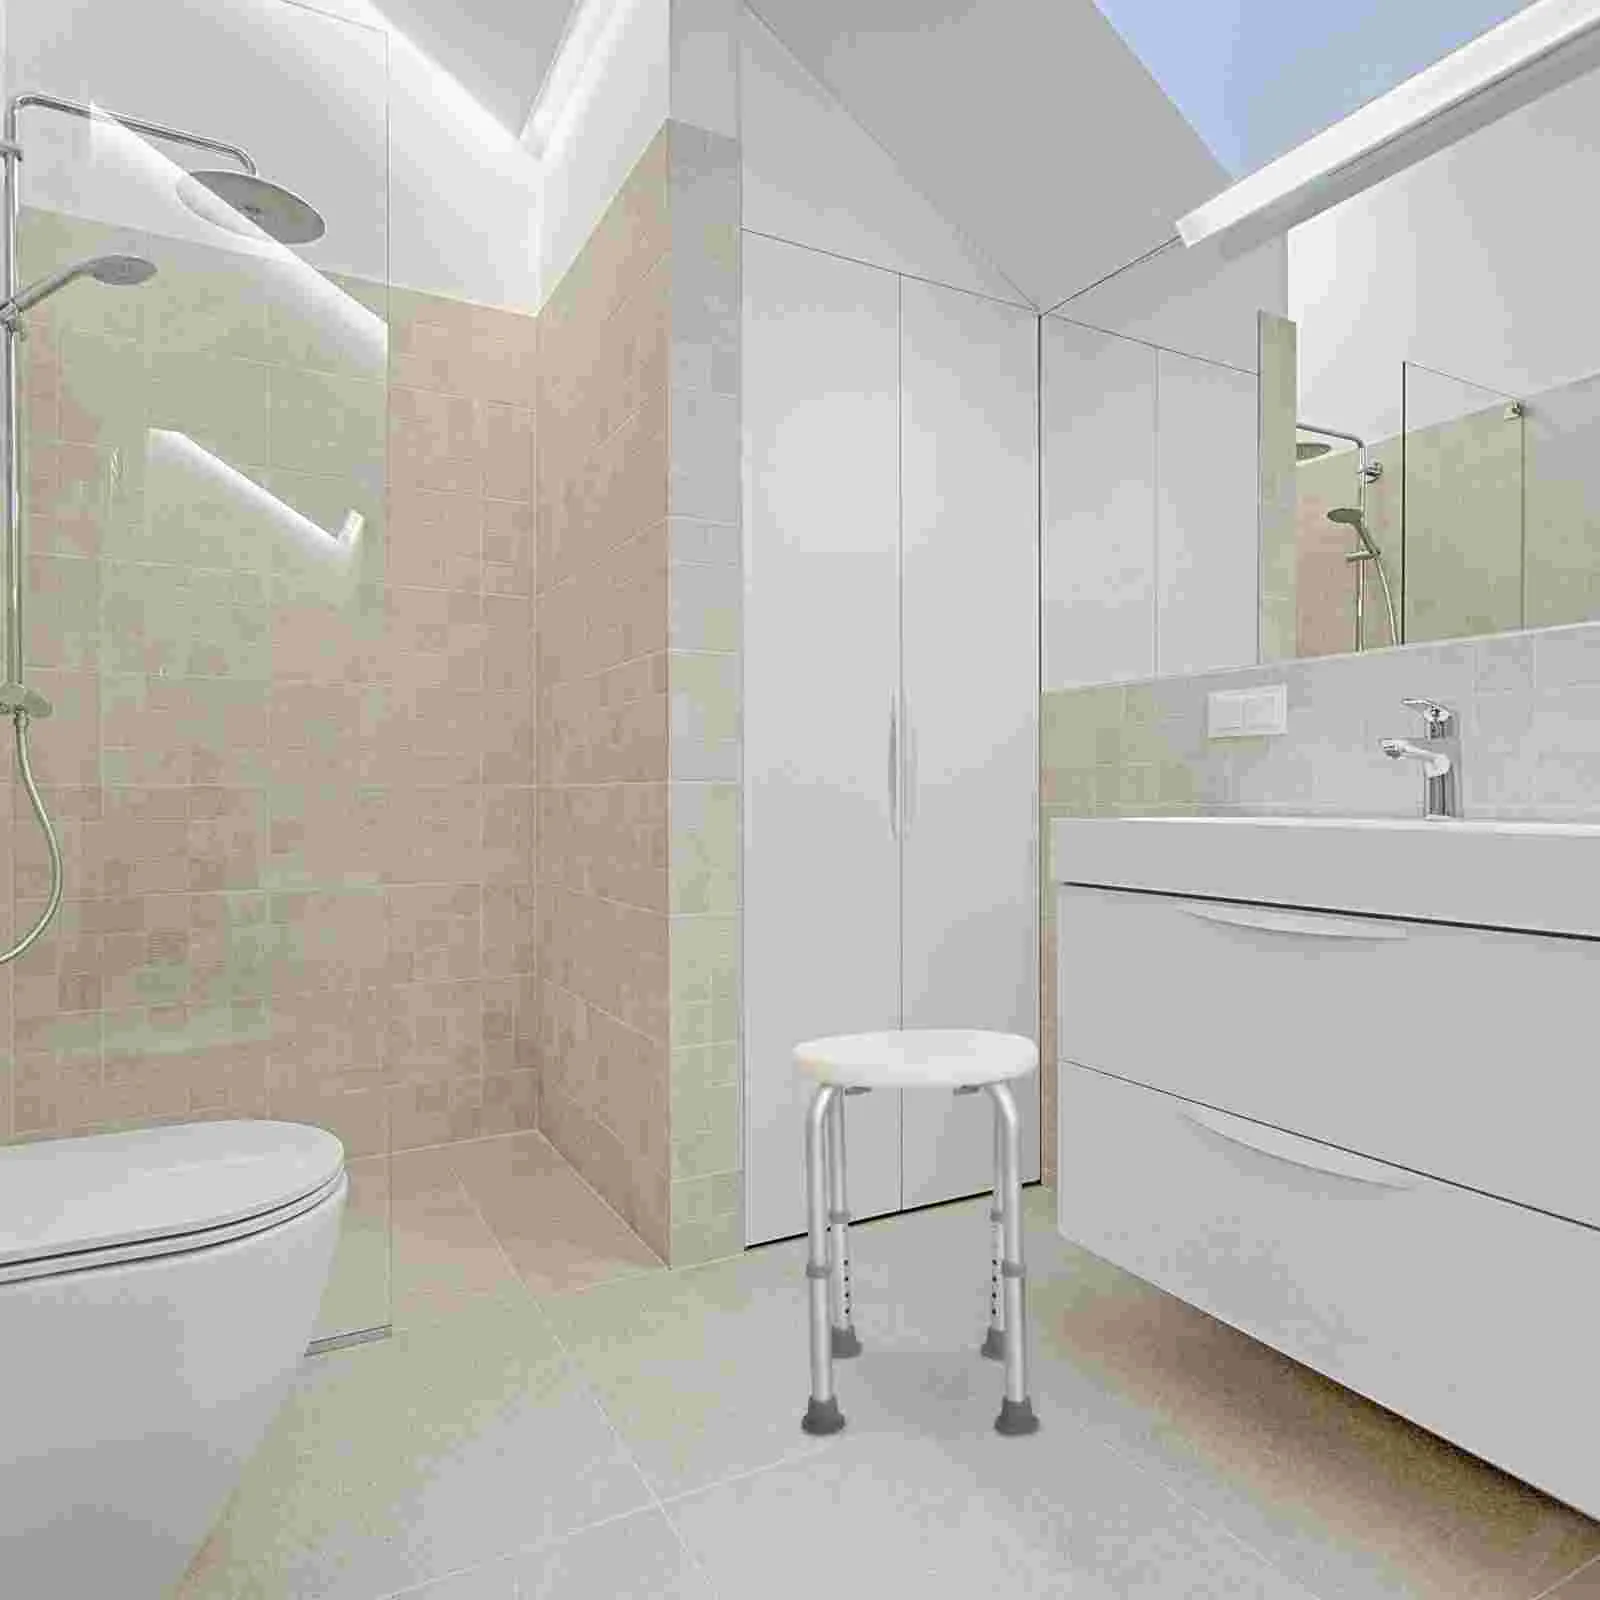 

Stool Bath Shower Adjustable Chair Swivel Tub Bench Elderly Chairs Bathroom Safety Bathtub Kids Senior